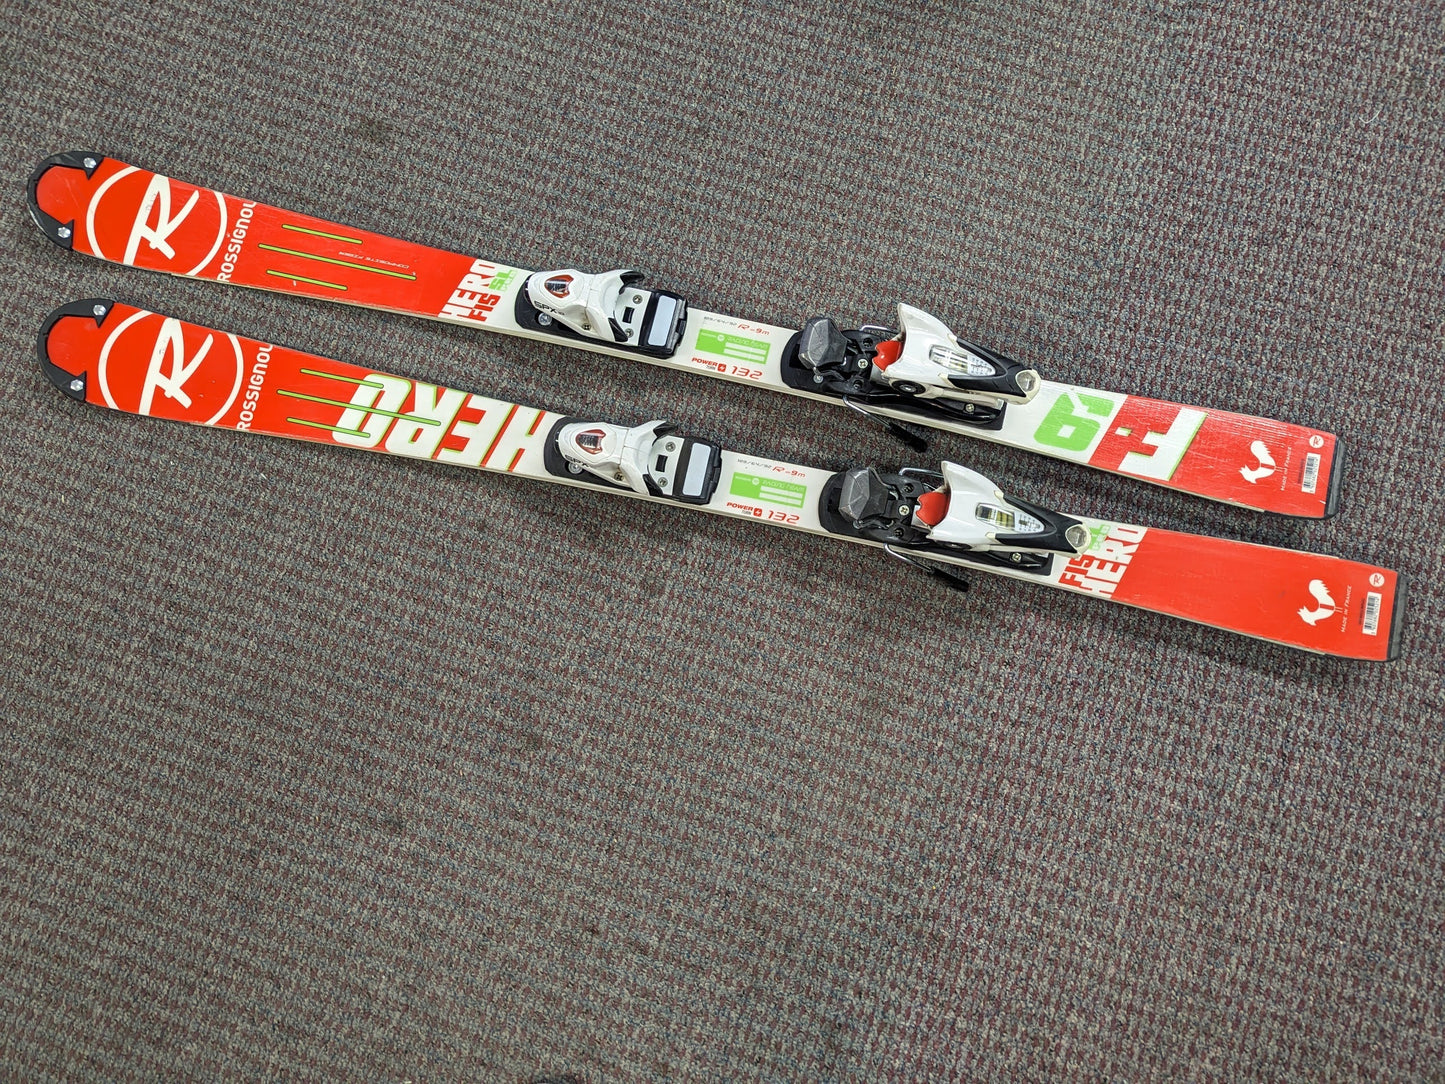 Rossignol Hero SL Pro Skis w/Look Bindings Size 132 Cm Color Orange Condition Used